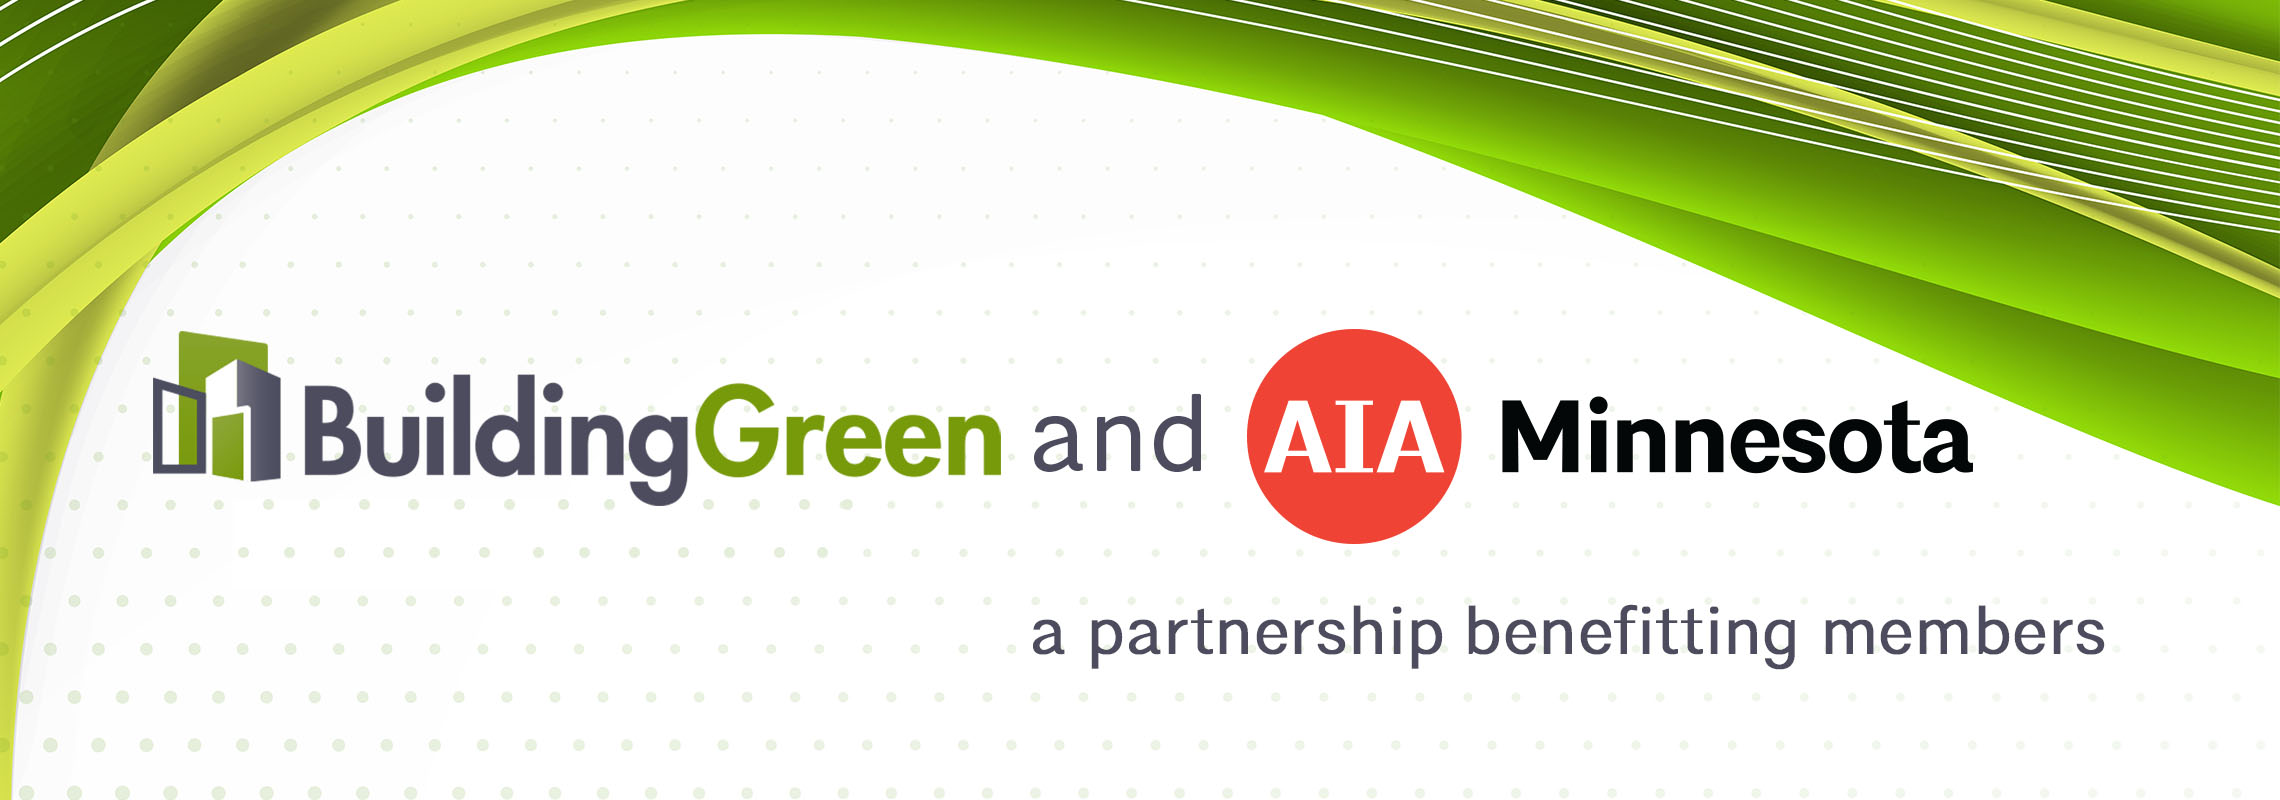 Building Green Partnership